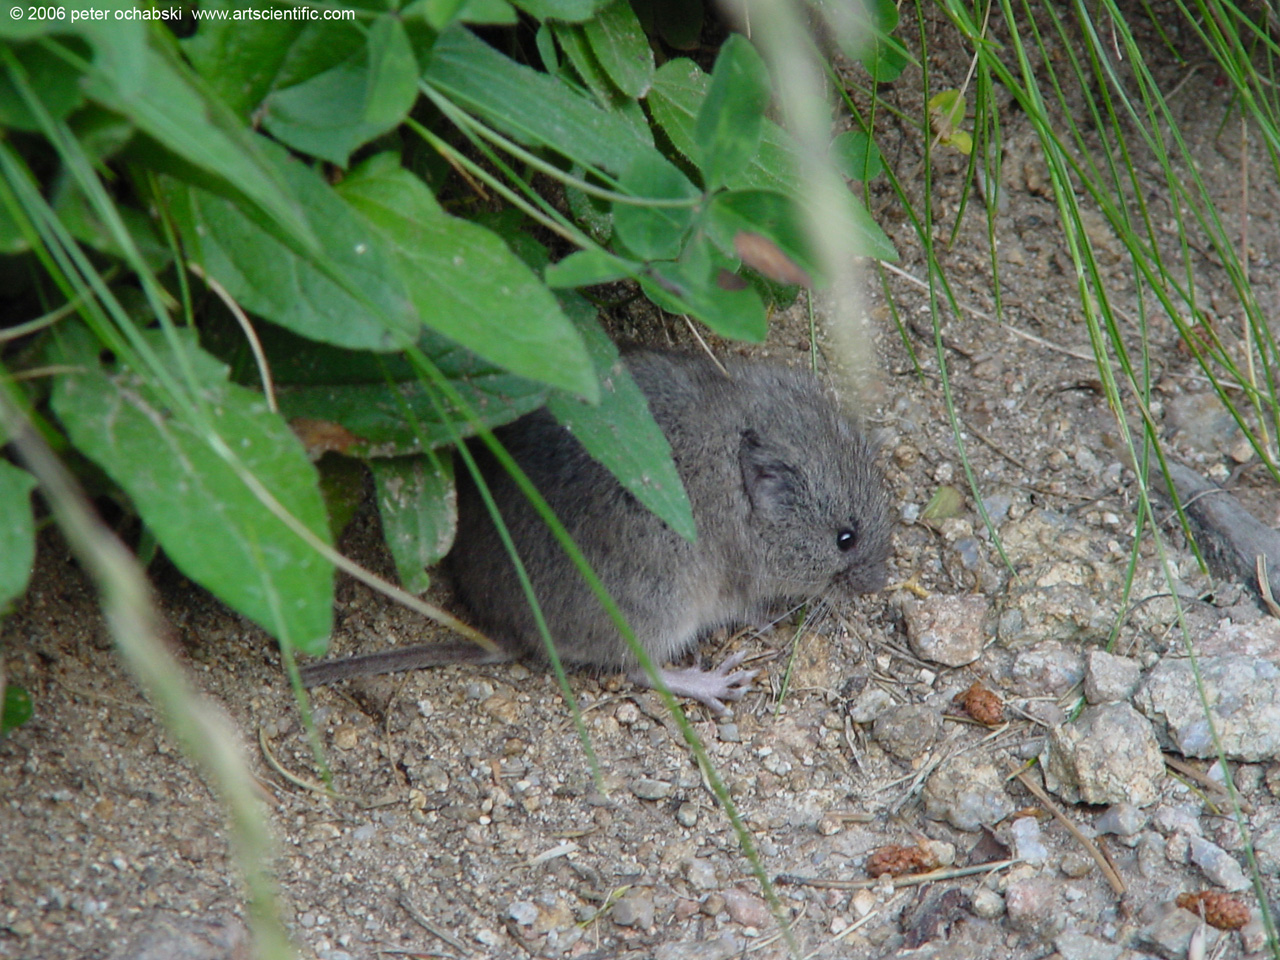 ribez cute little mouse under leaves